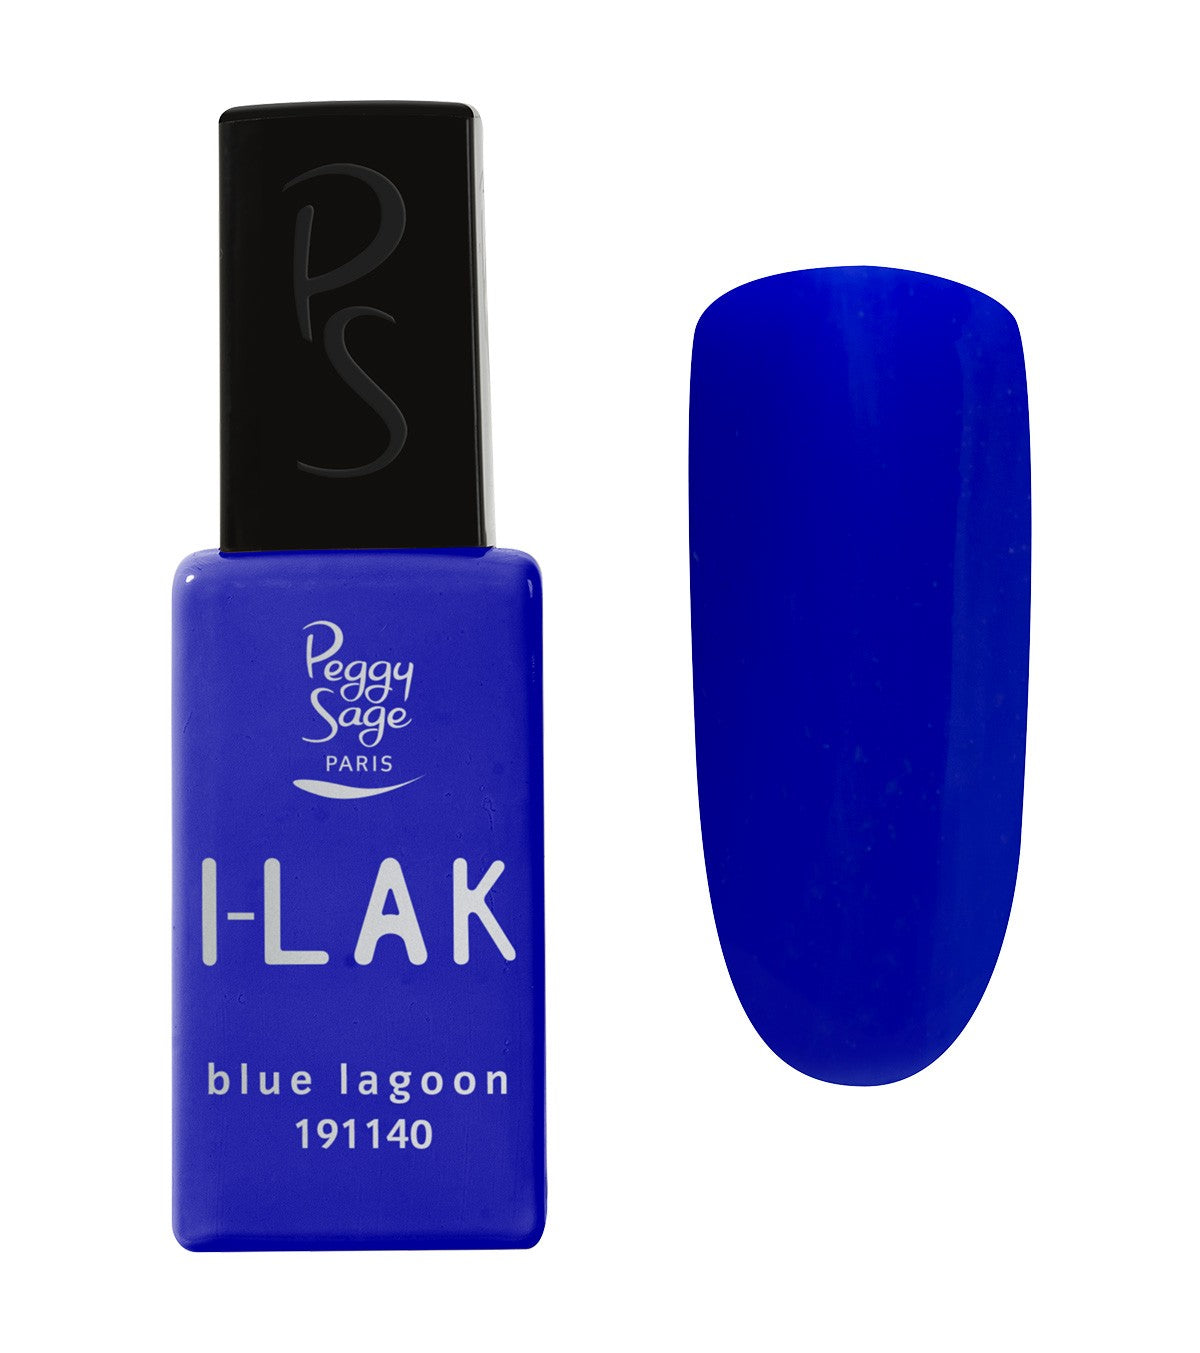 I-LAK Blue Lagoon Ref 191140